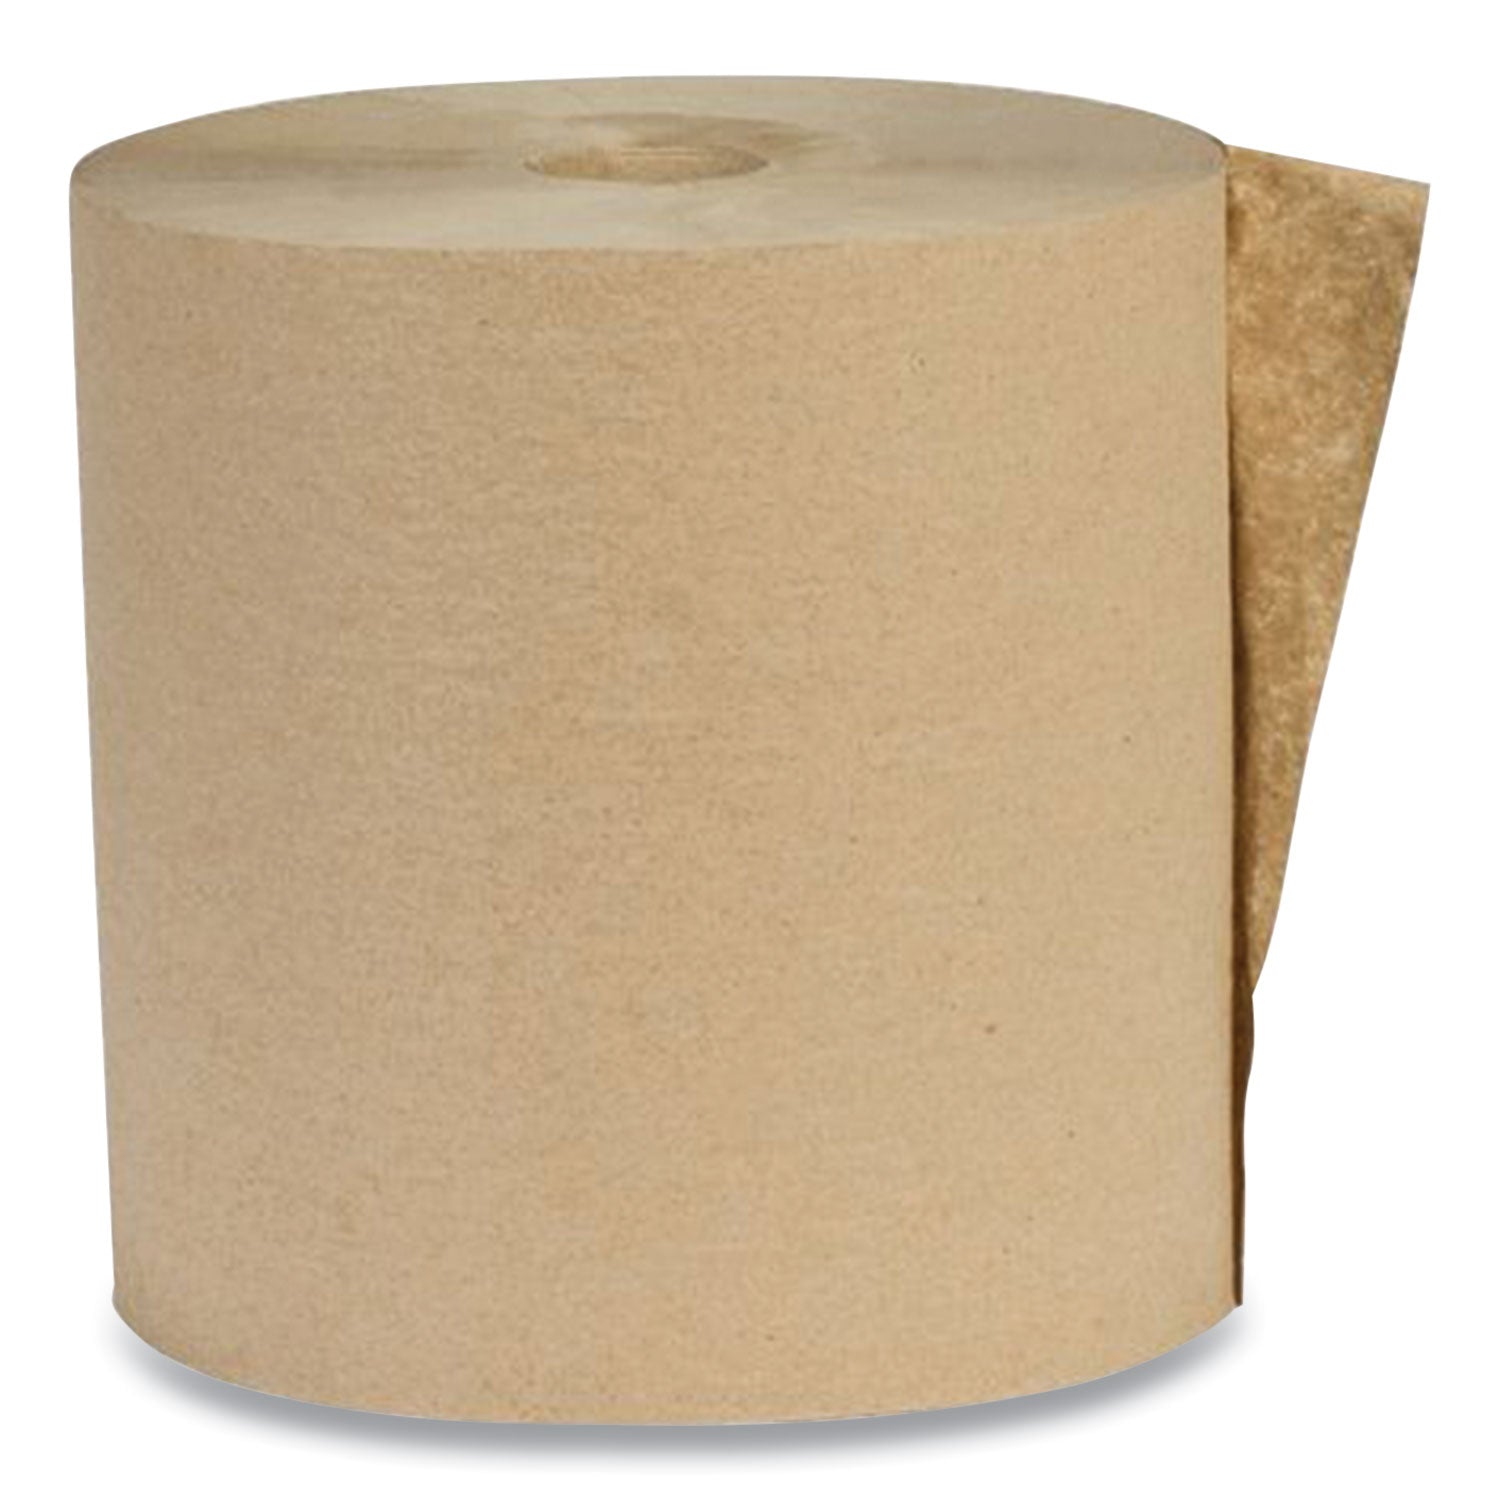 recycled-hardwound-paper-towels-1-ply-787-x-700-ft-kraft-12-rolls-carton_apaek7016 - 1